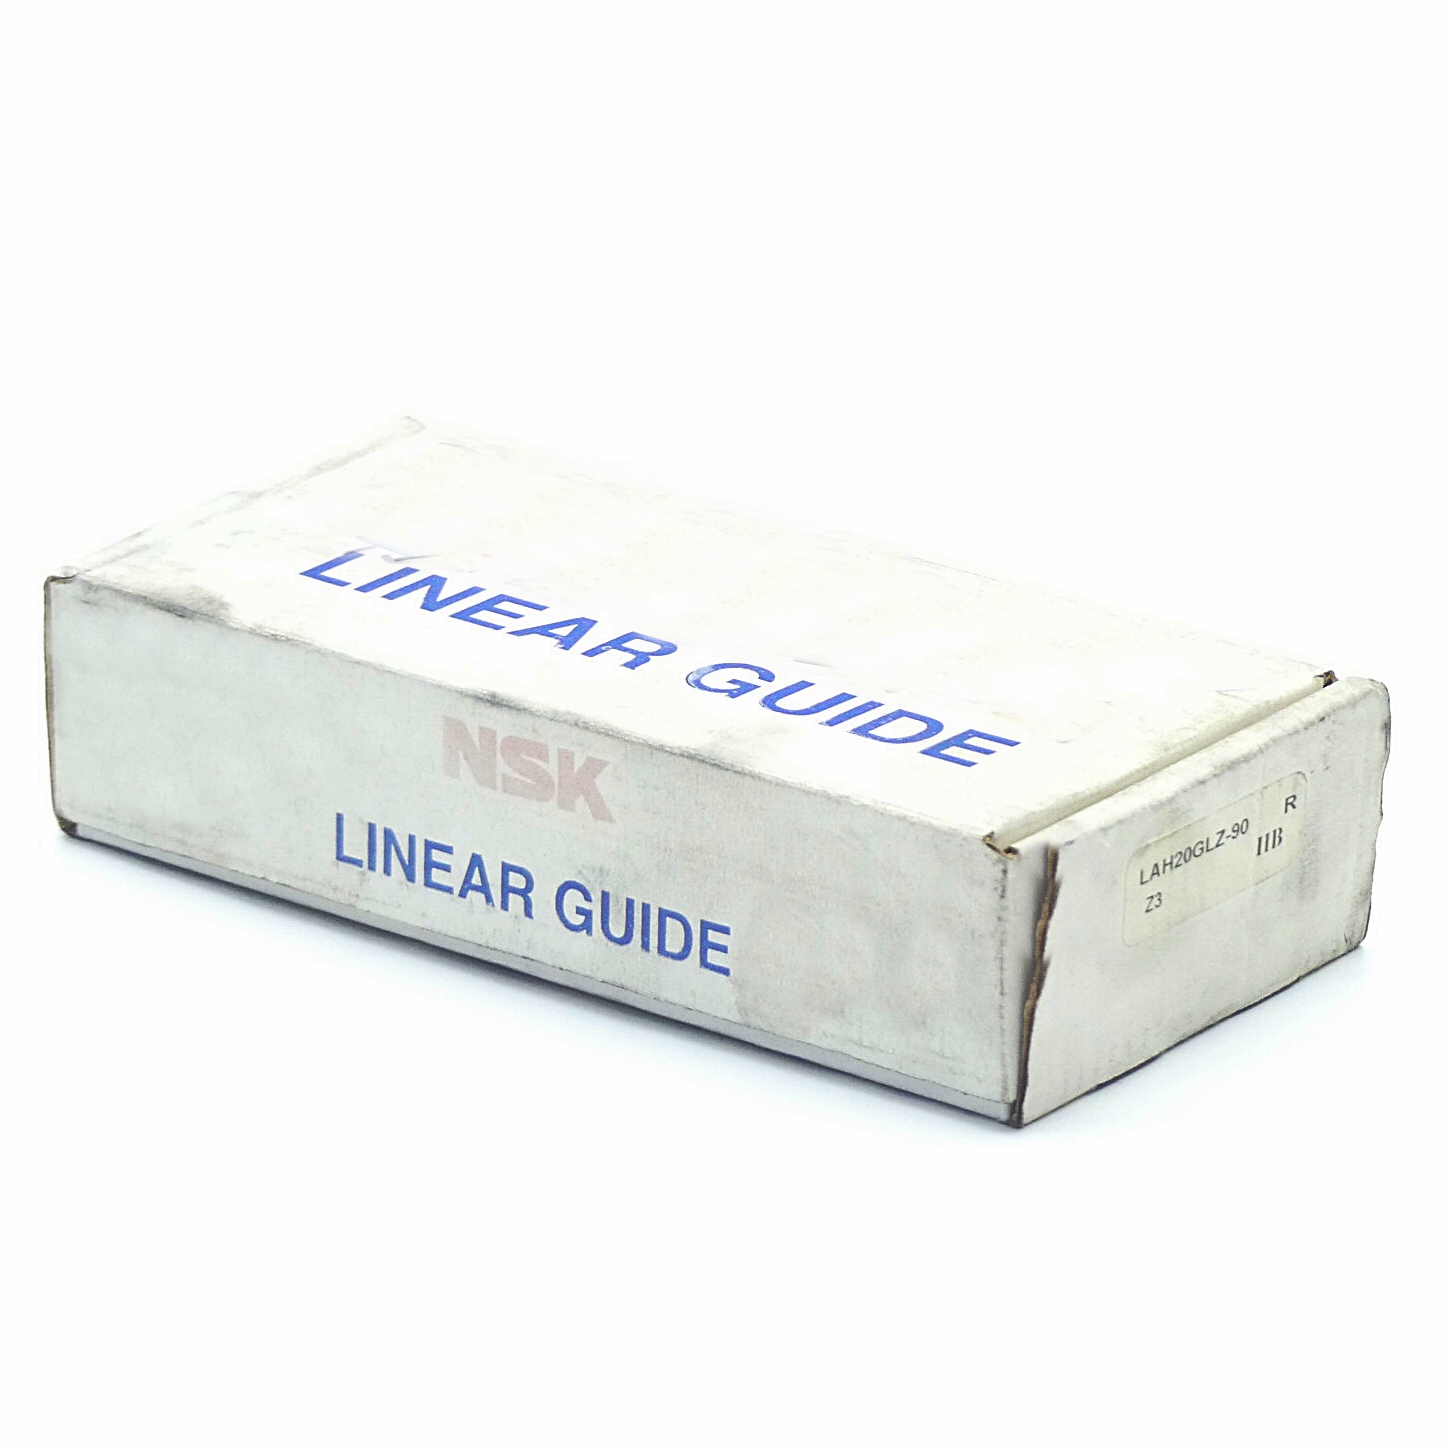 Linear guide LAH20GLZ-90 